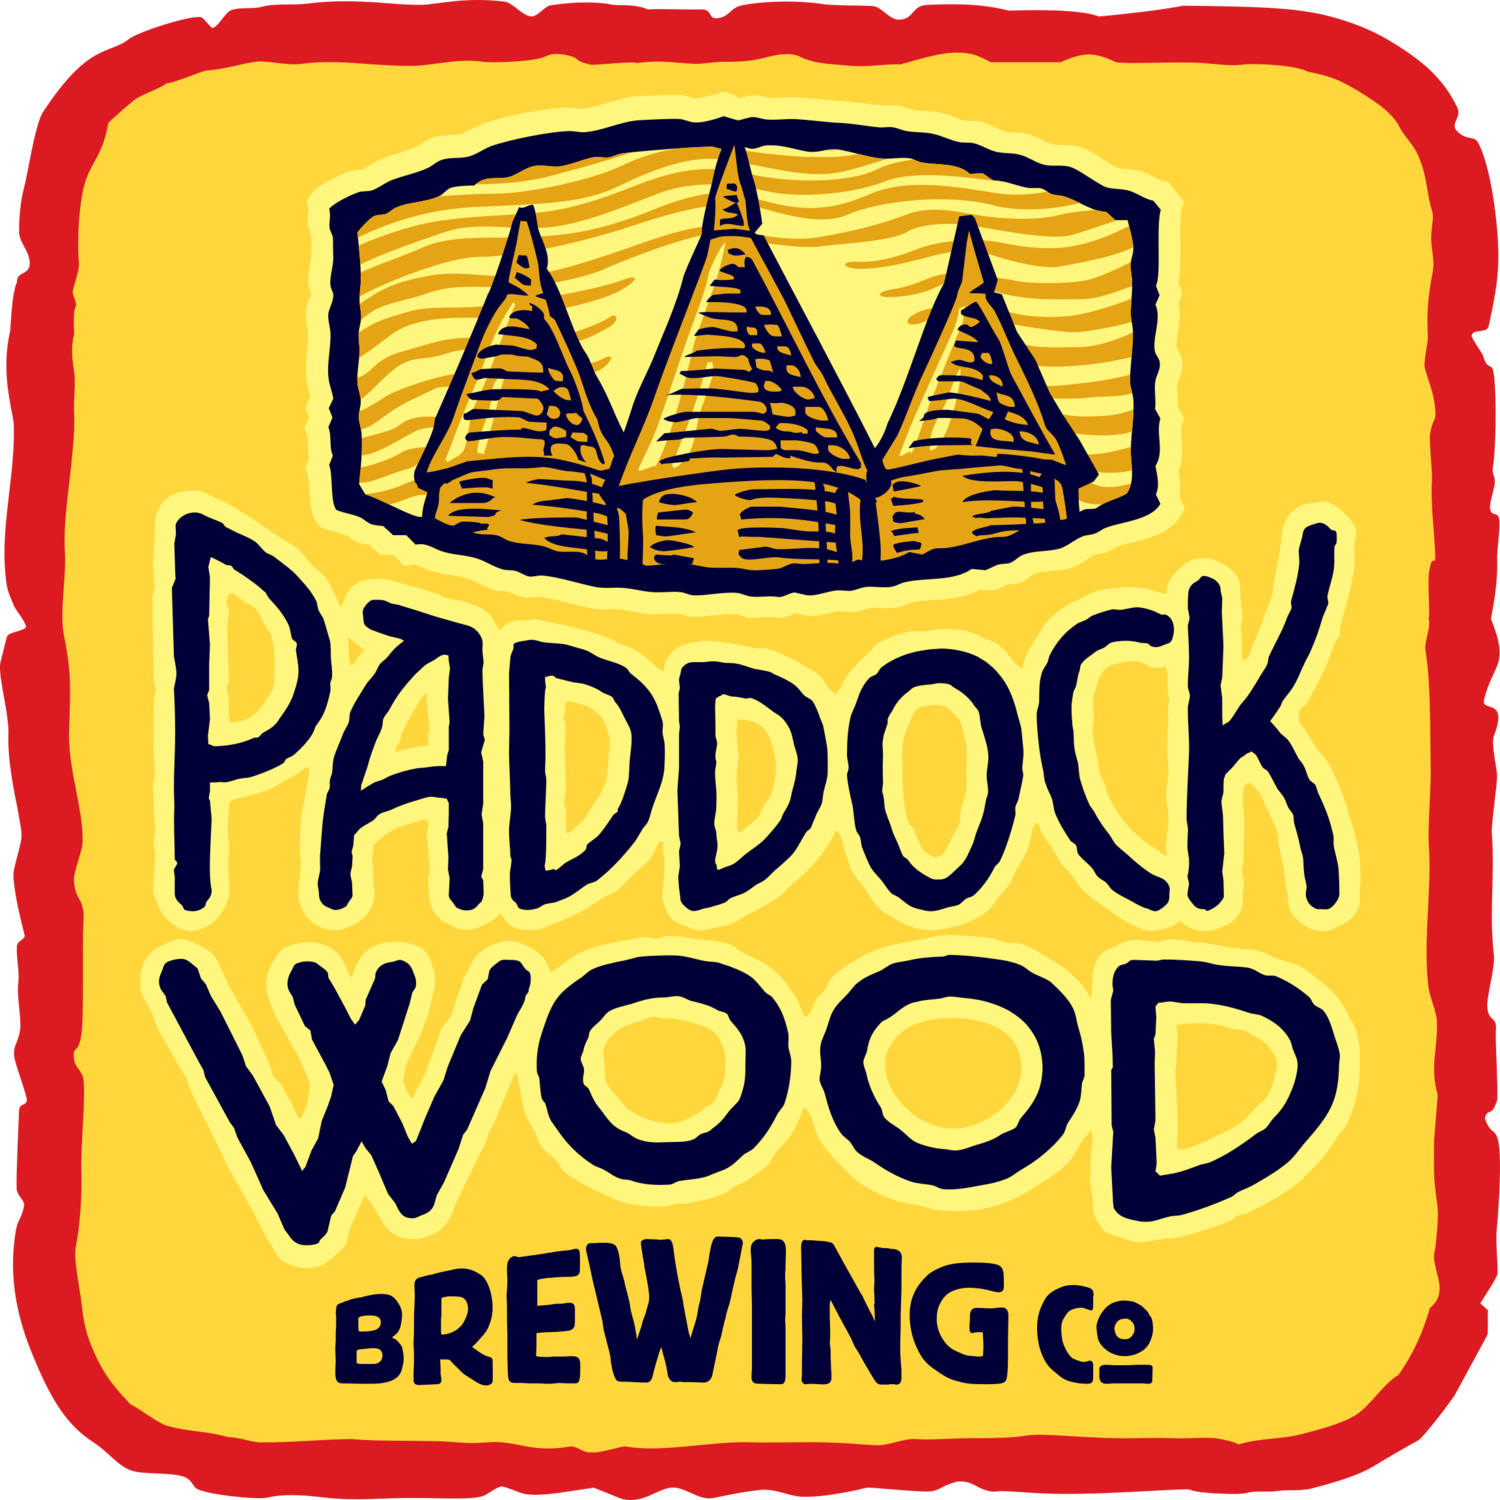 Paddock Wood Brewing Co.